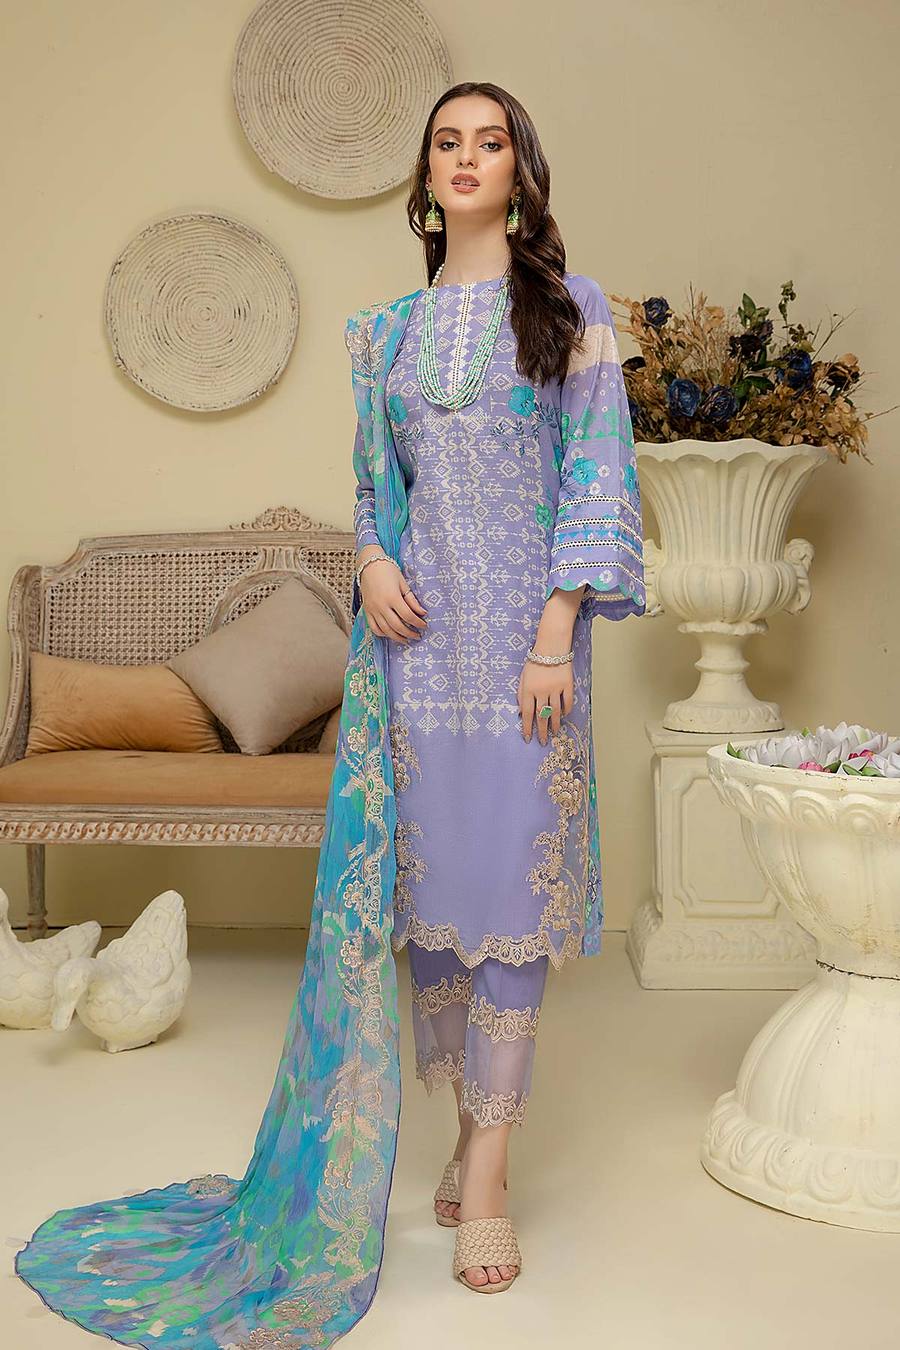 Buy Now Hazzel Charizma Beautiful Desiger Cotton Pakistani Salwar Suits  With Dupatta At Wholesaletextile.in